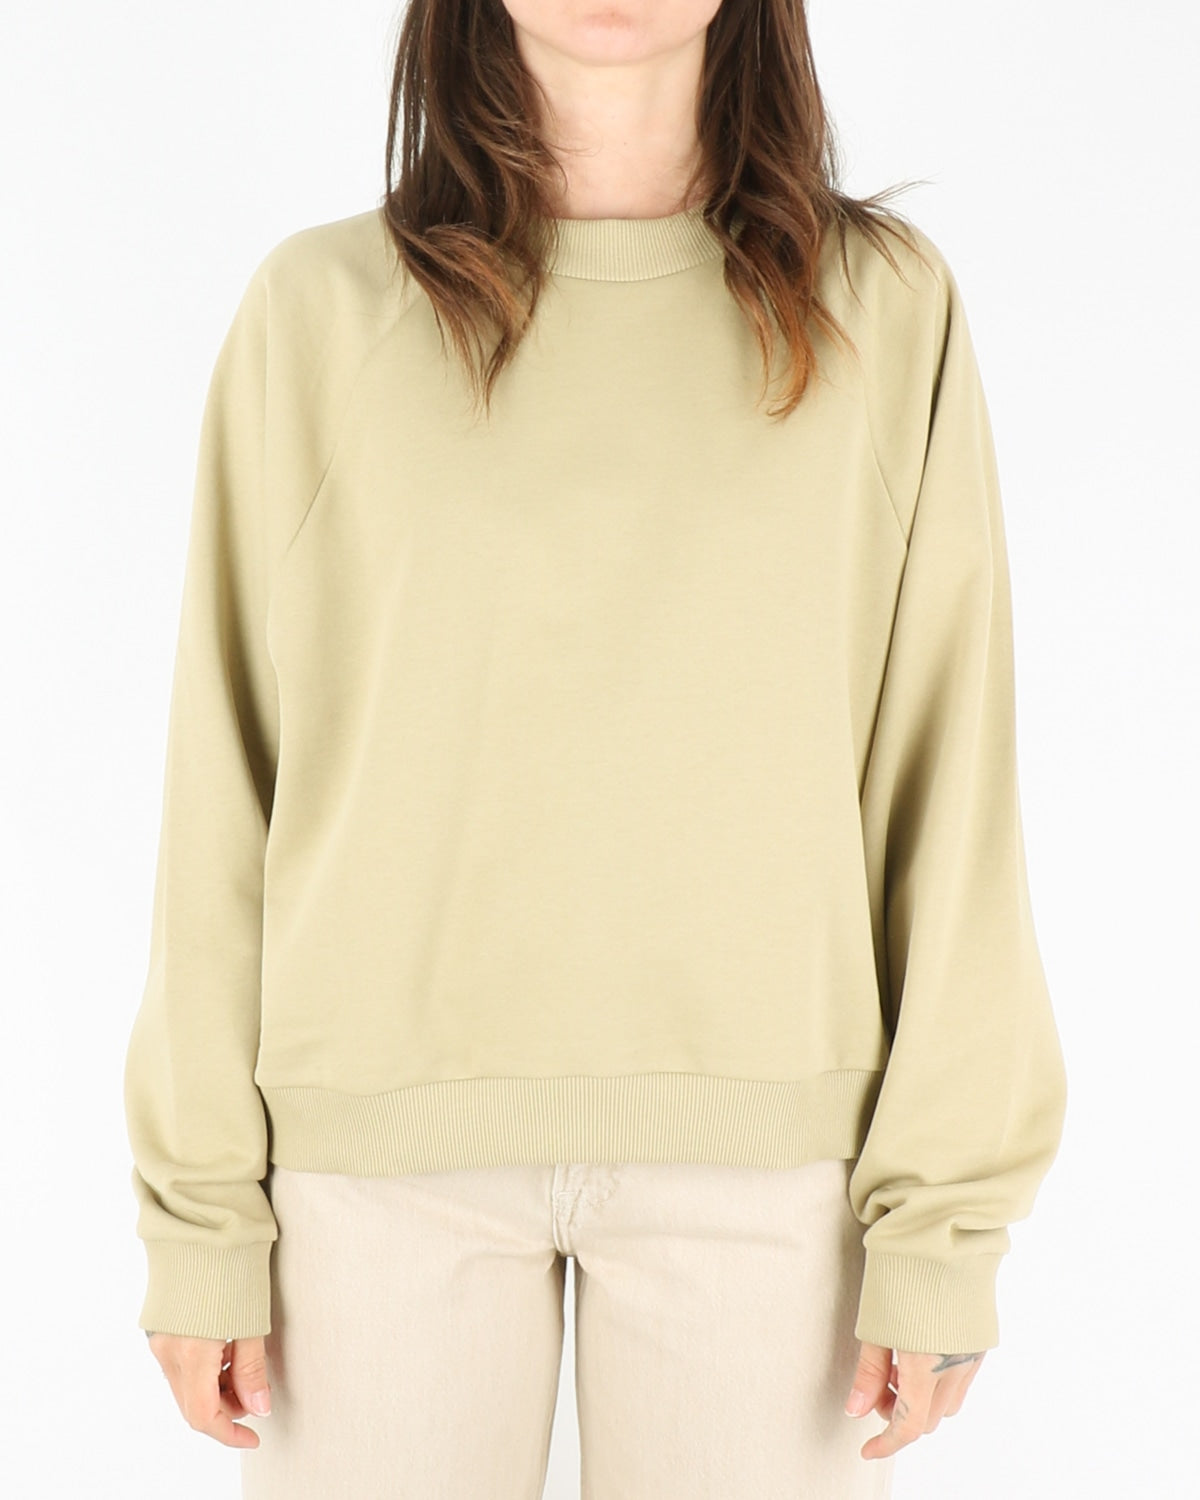 blanche_hella oversize sweatshirt_gray green_1_3